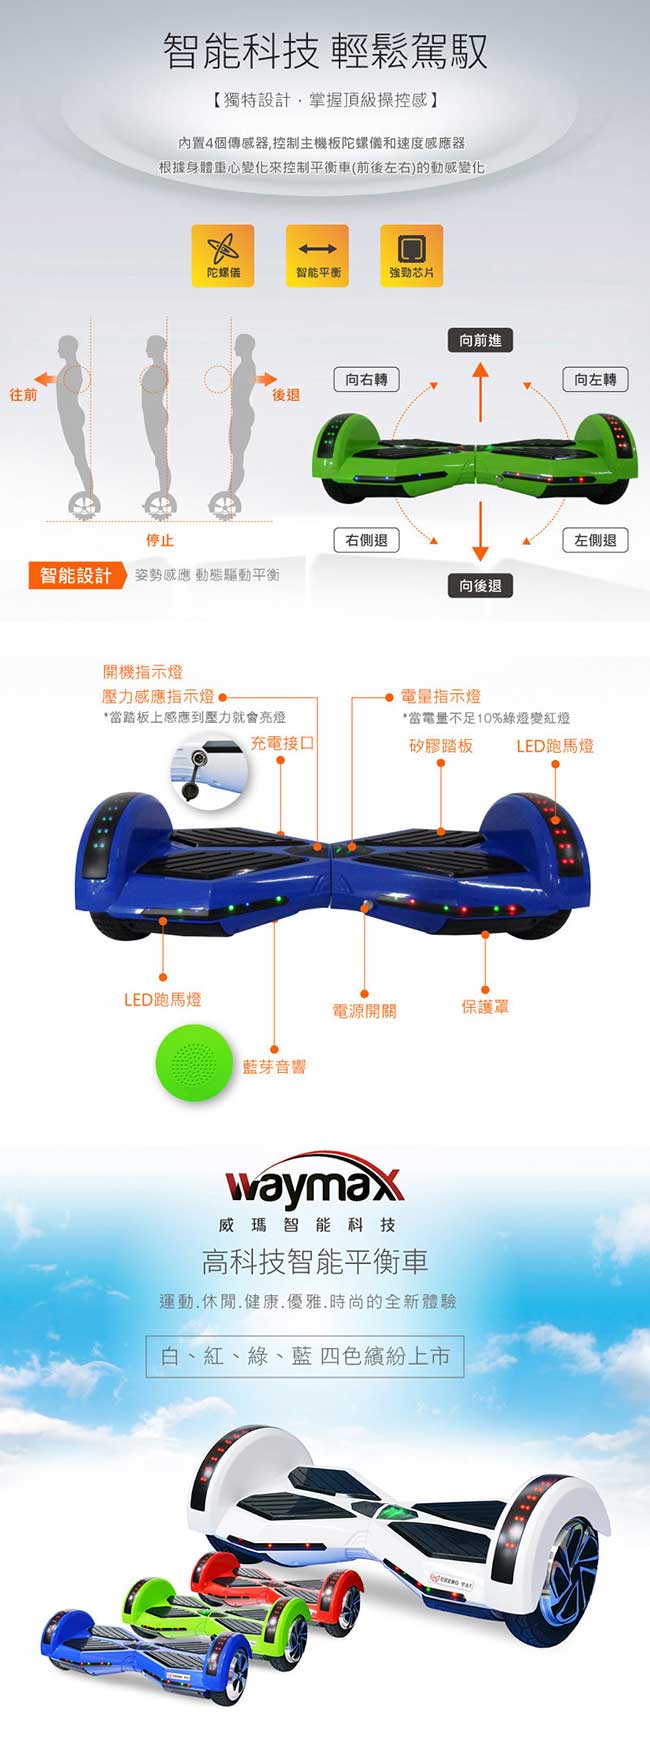 Waymax威瑪 高科技智能平衡車 藍/綠/紅/白 (四色可選)